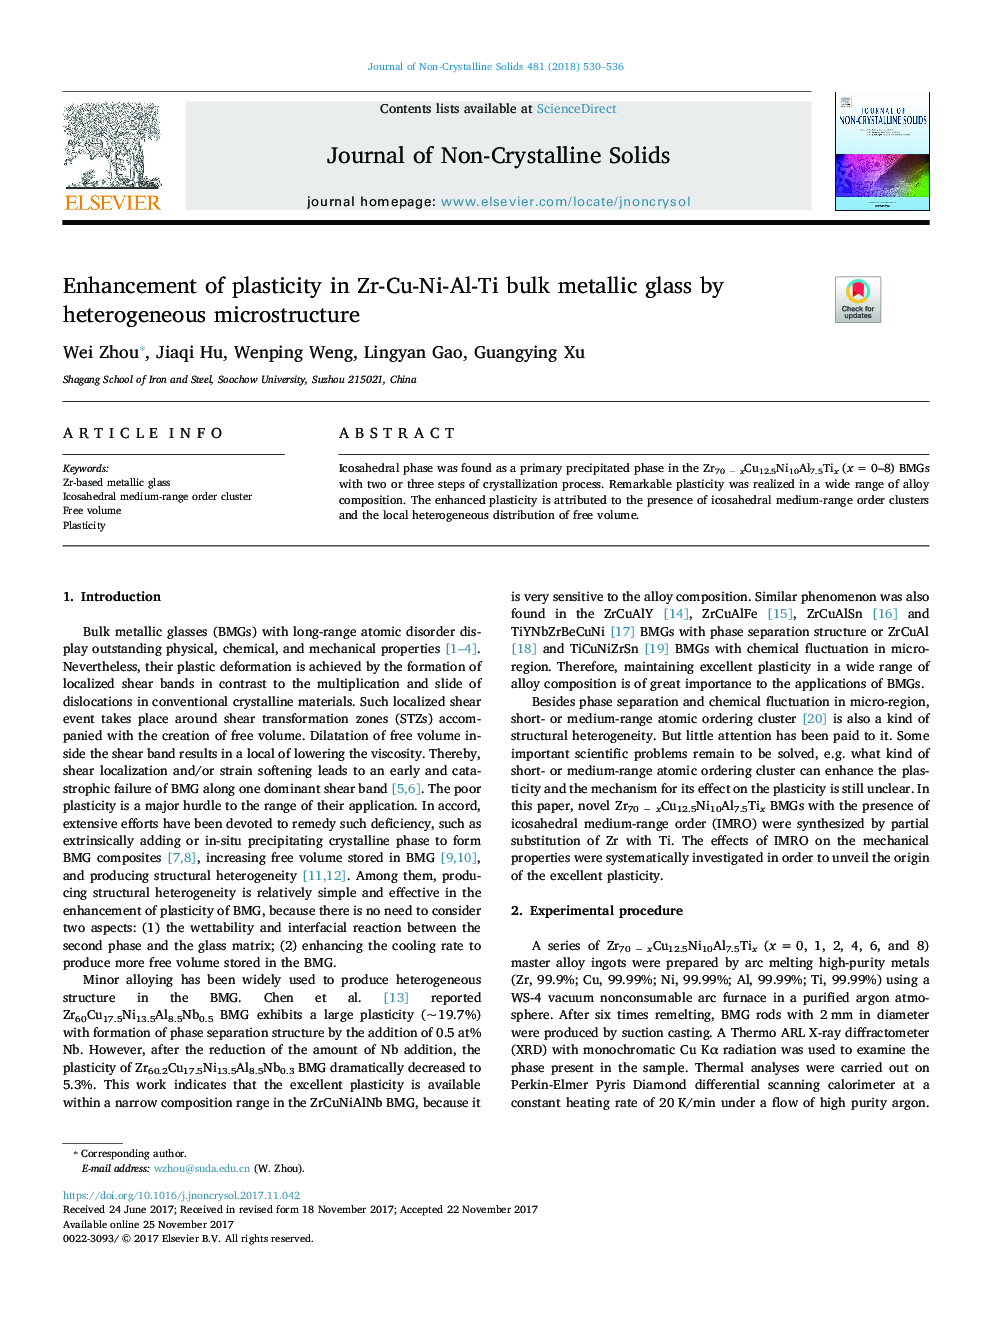 Enhancement of plasticity in Zr-Cu-Ni-Al-Ti bulk metallic glass by heterogeneous microstructure